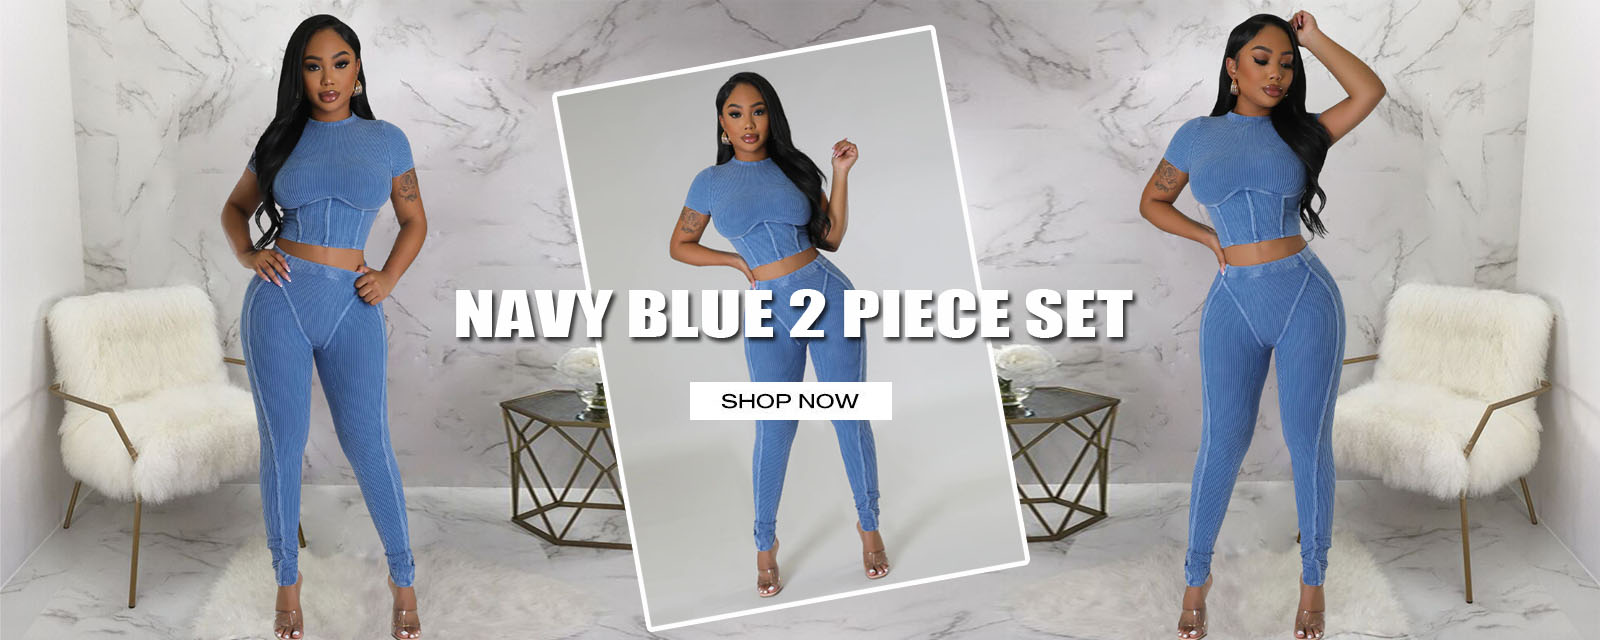 navy blue 2 piece set